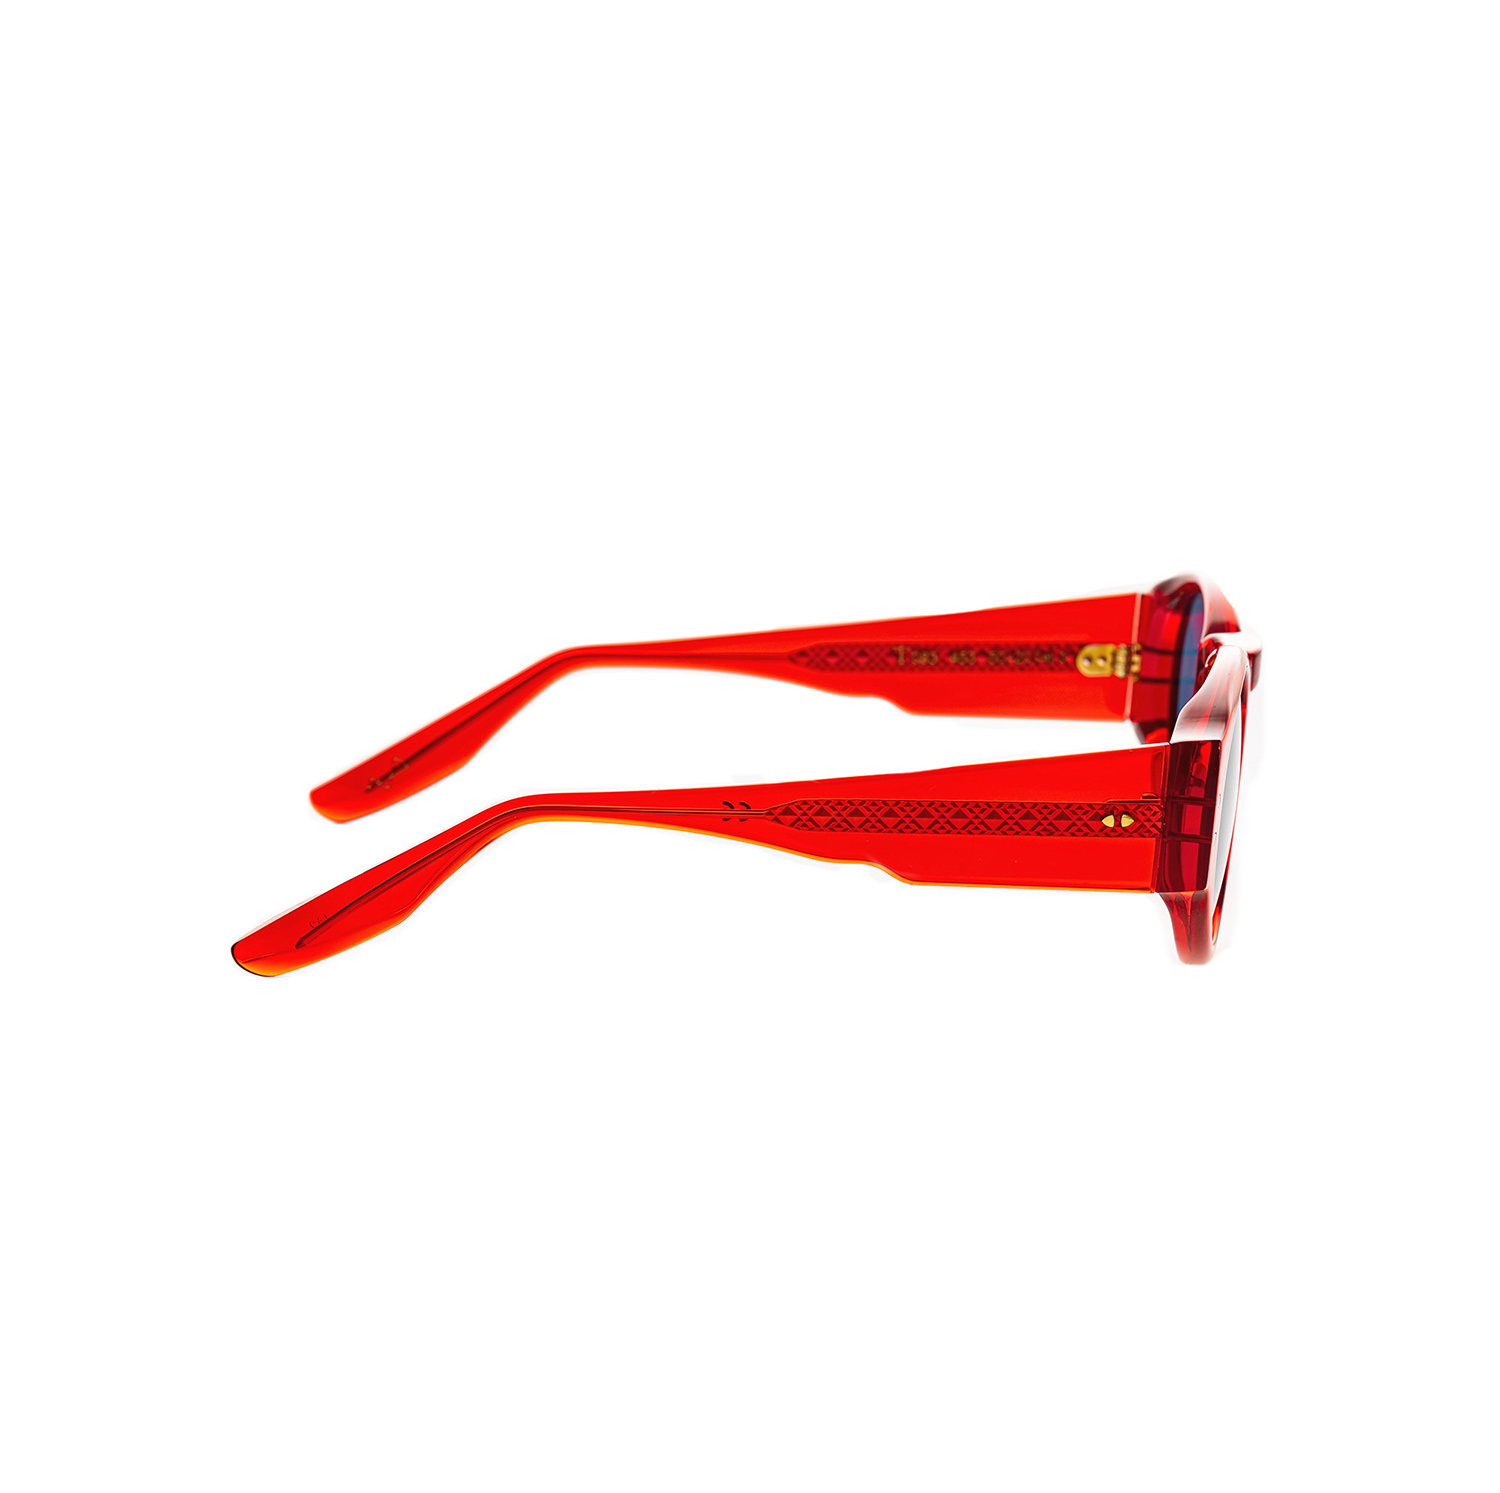 Costantino Toffoli Glasses model T083